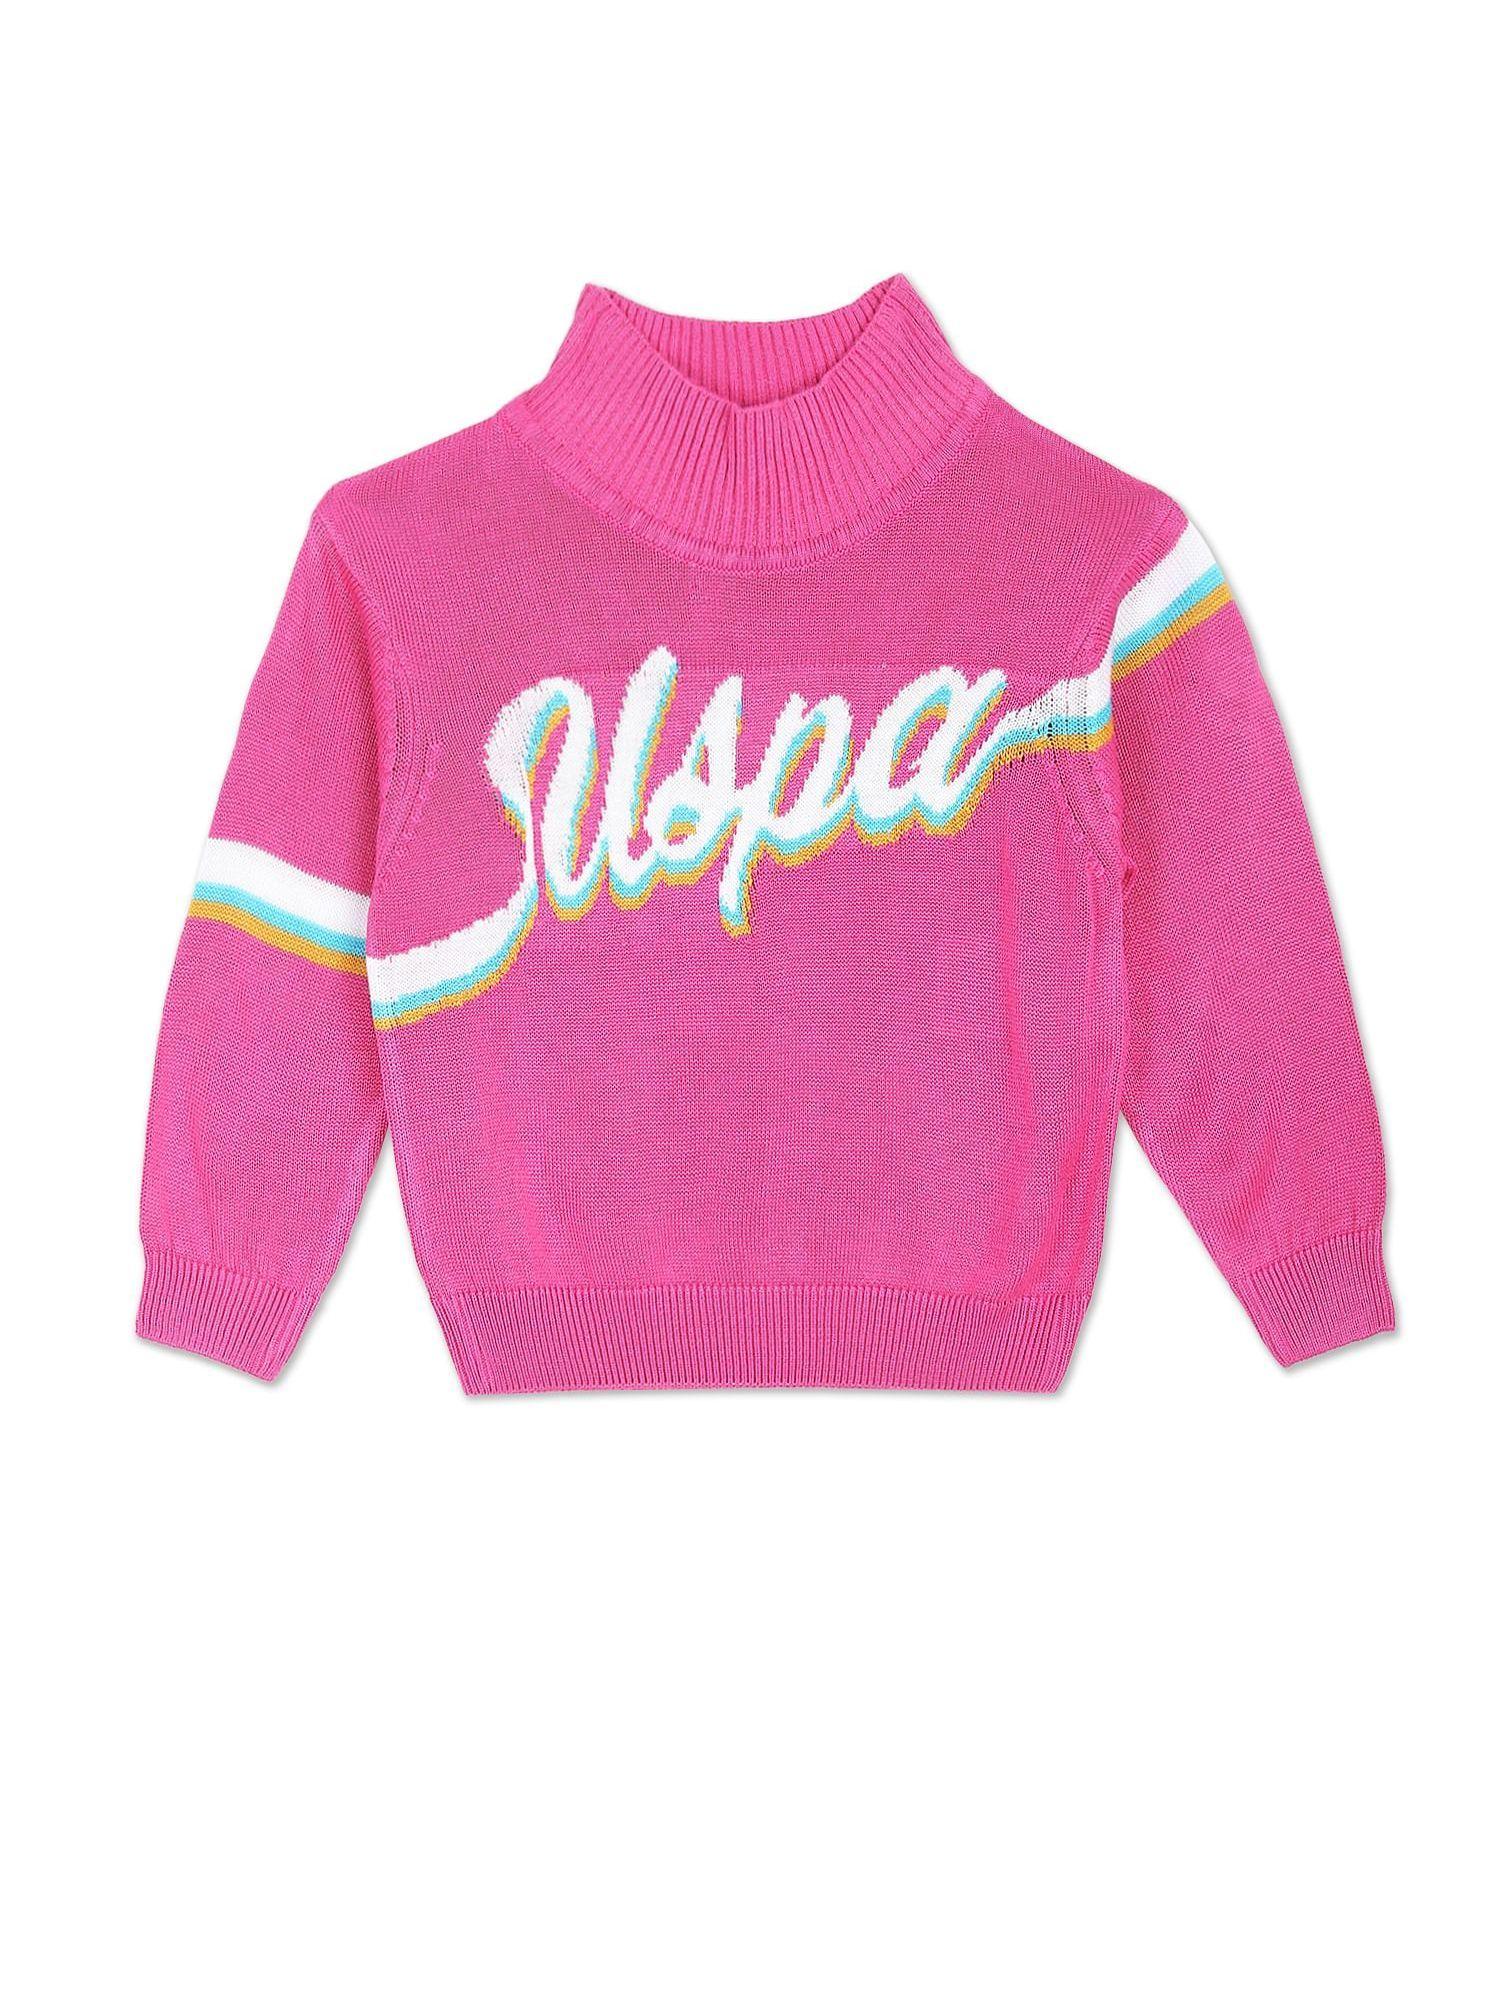 Girls Pink High Neck Patterned Knit Viscose Sweater